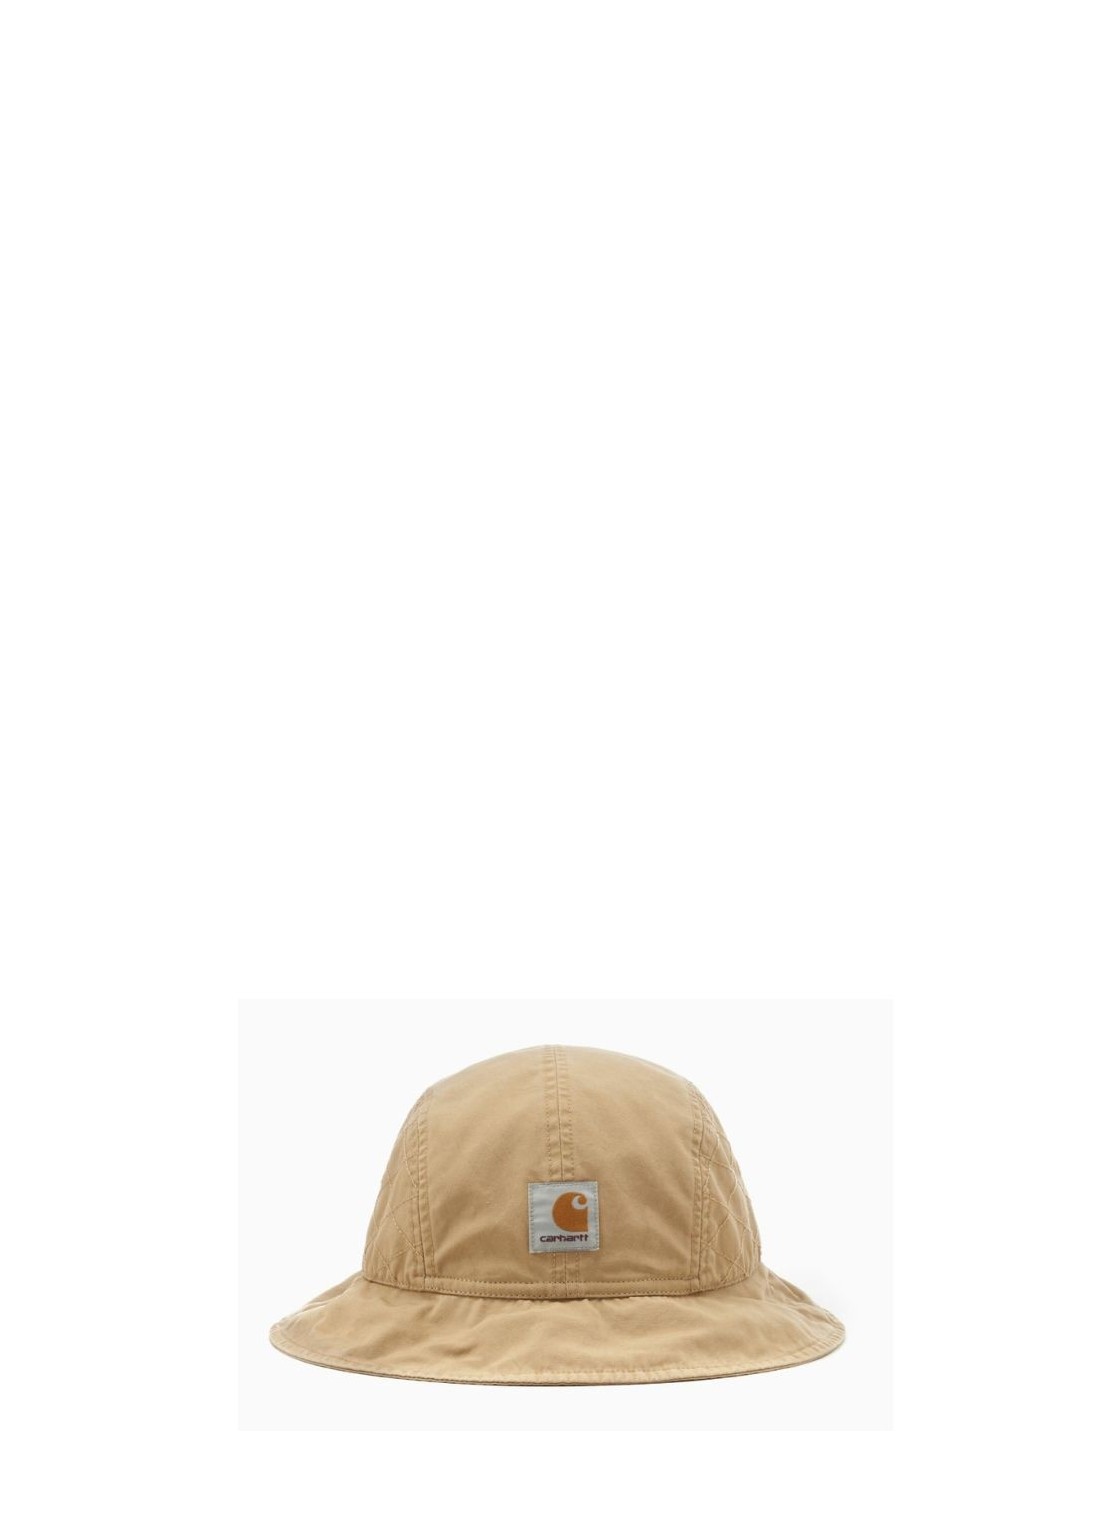 Gorras carhartt cap man tyler bucket hat i031615 07exx talla beige
 